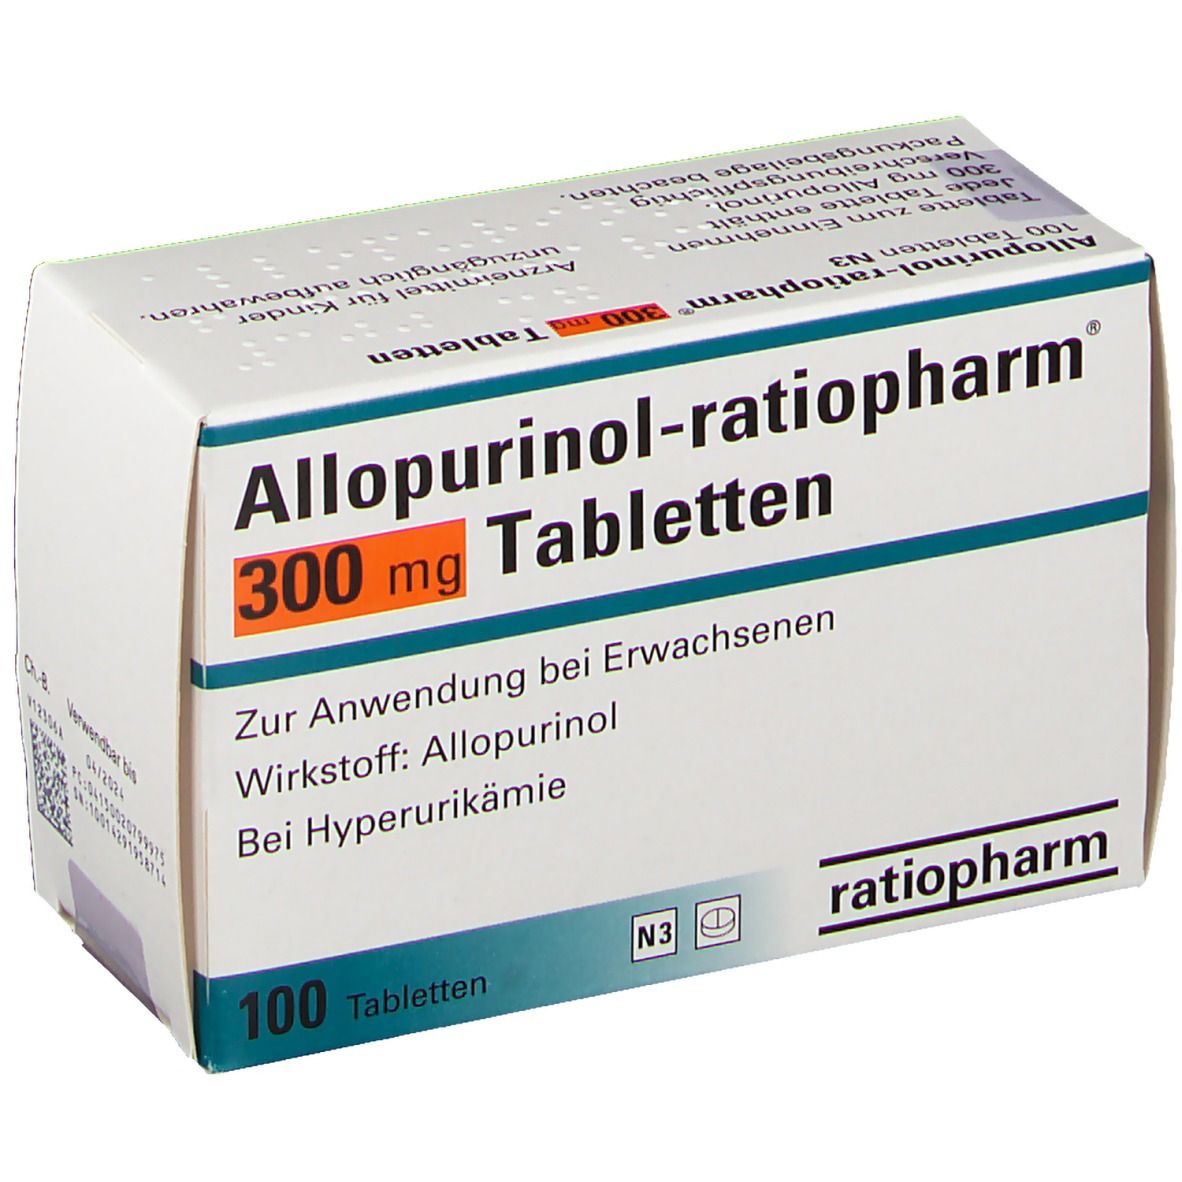 Allopurinol-ratiopharm® 300 mg